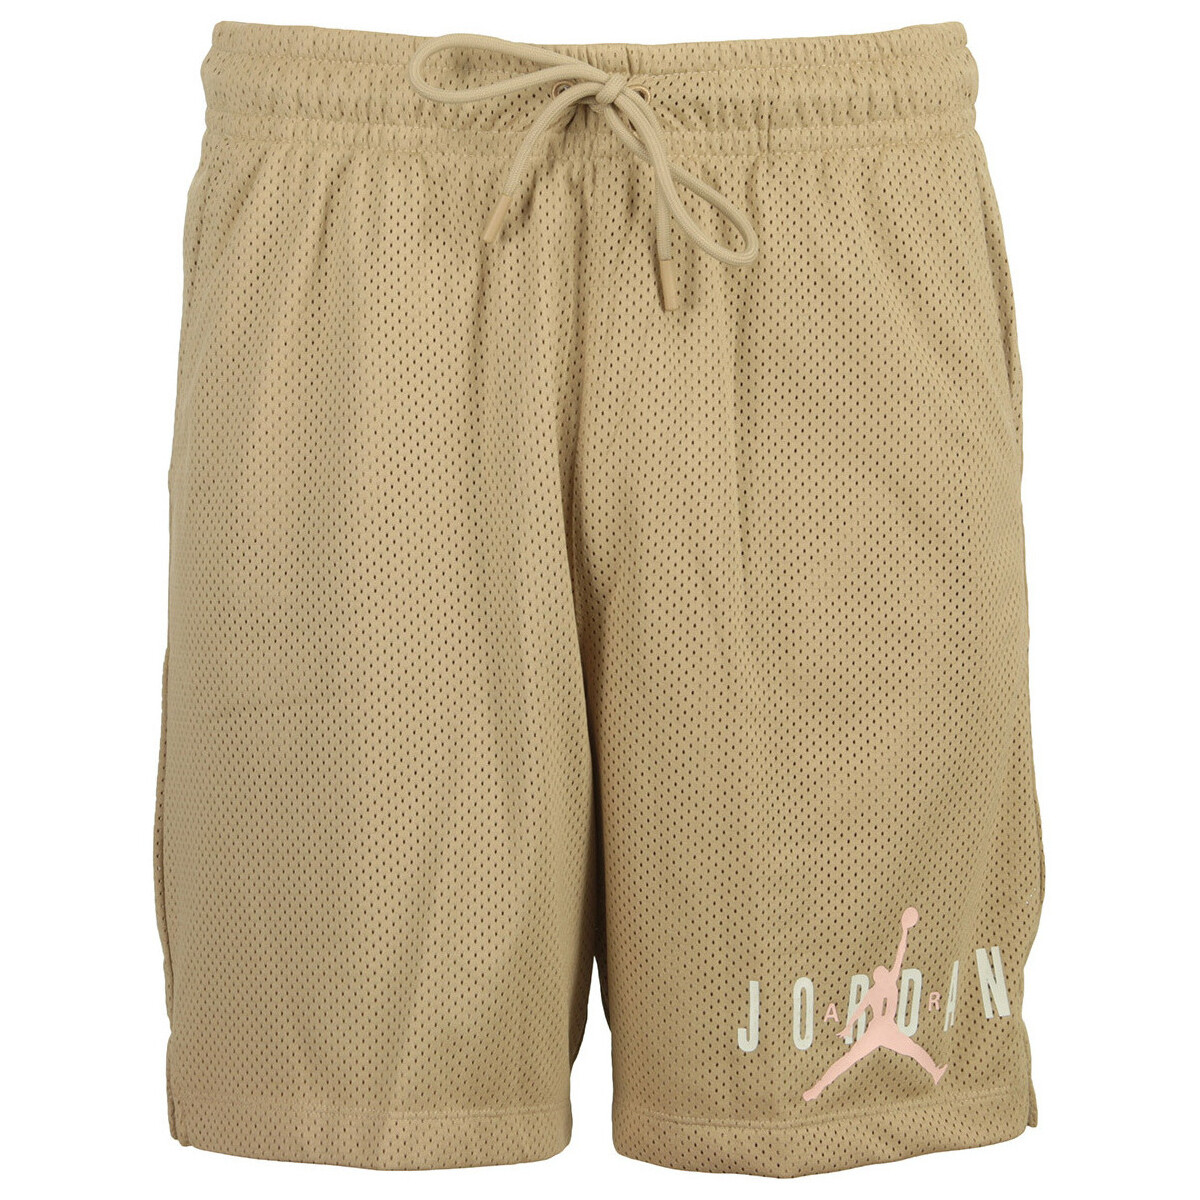 Abbigliamento Uomo Shorts / Bermuda Nike M J Ess Mesh Gfx Short Beige